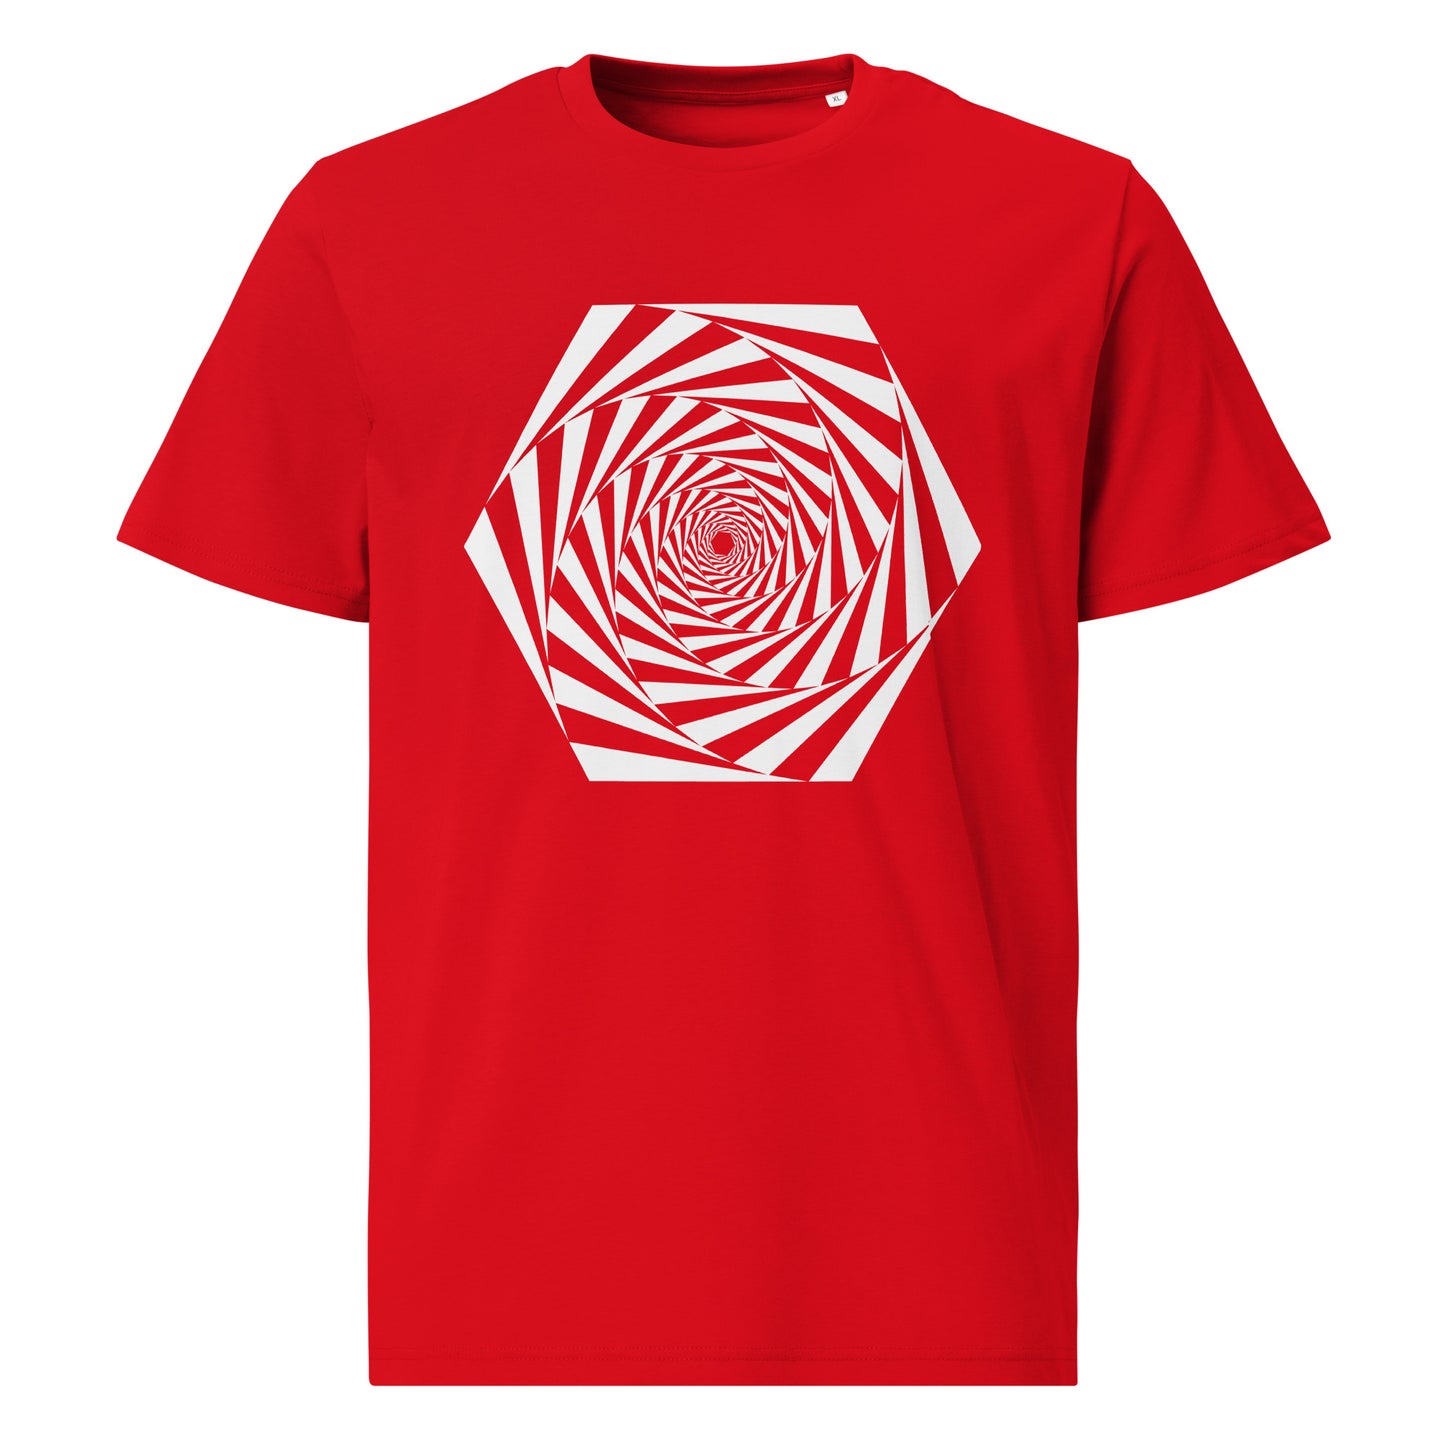 Hexagon-Spiral - White Design - Unisex organic cotton t-shirt